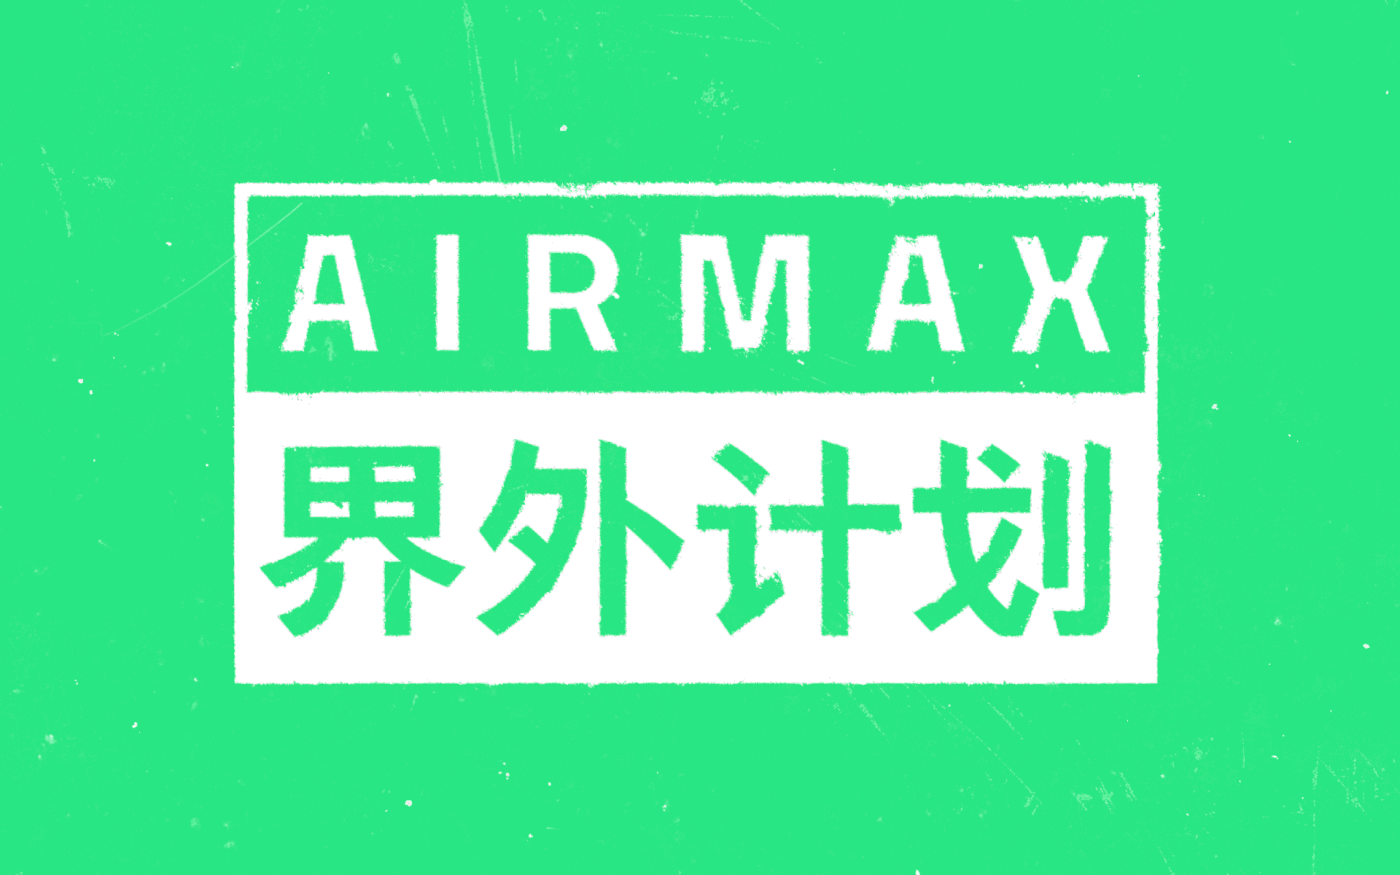 Nike cityaccelator nikechina 界外计划 airmax AirMaxDay shanghai